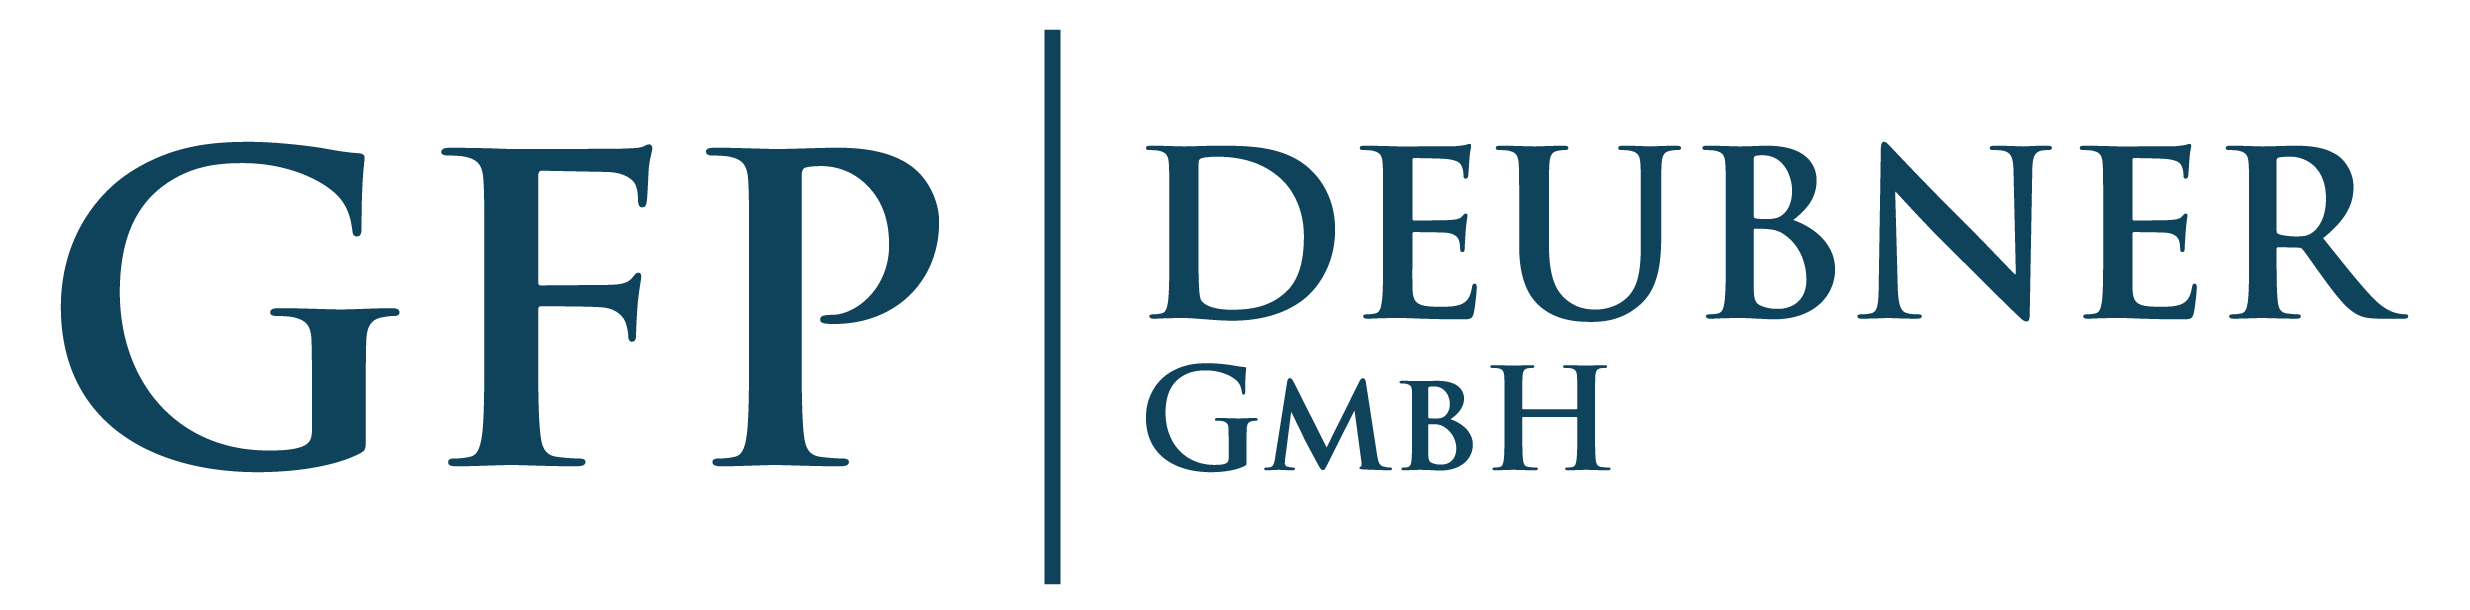 GFP-Deubner-GmbH-Logo-blue